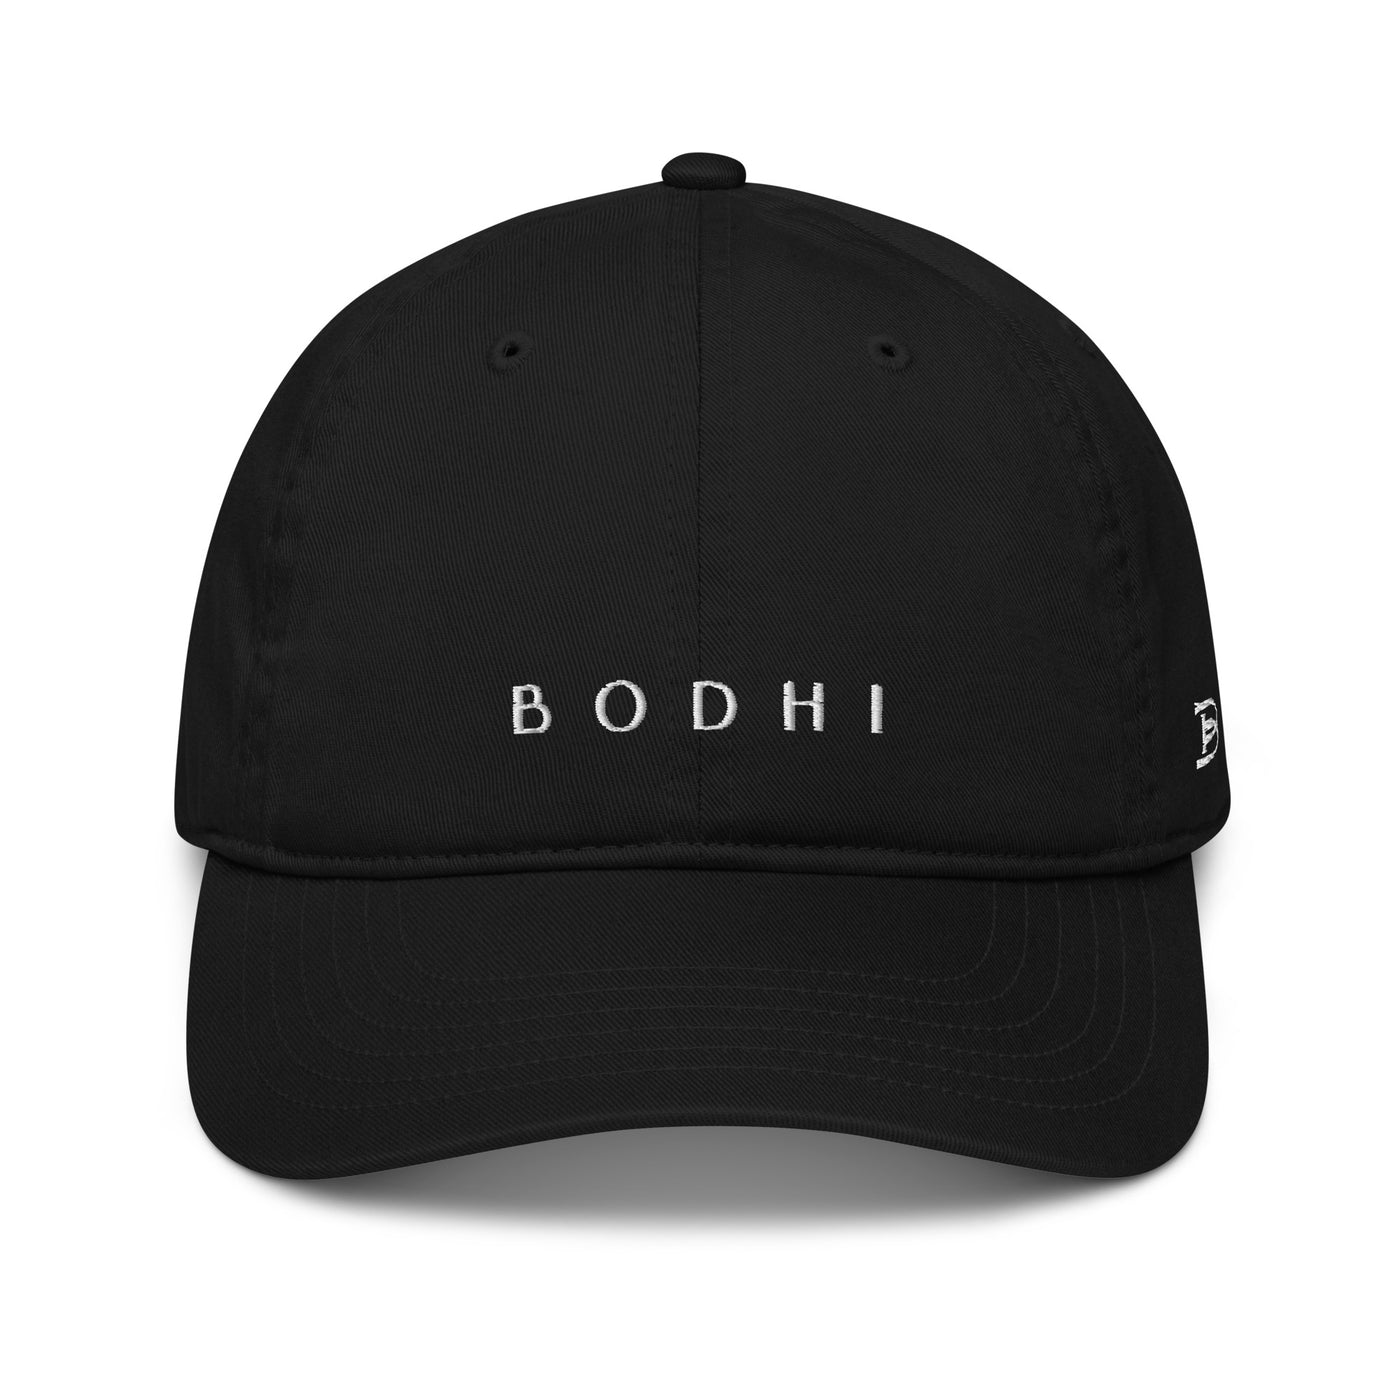 Bodhi House Cap Black